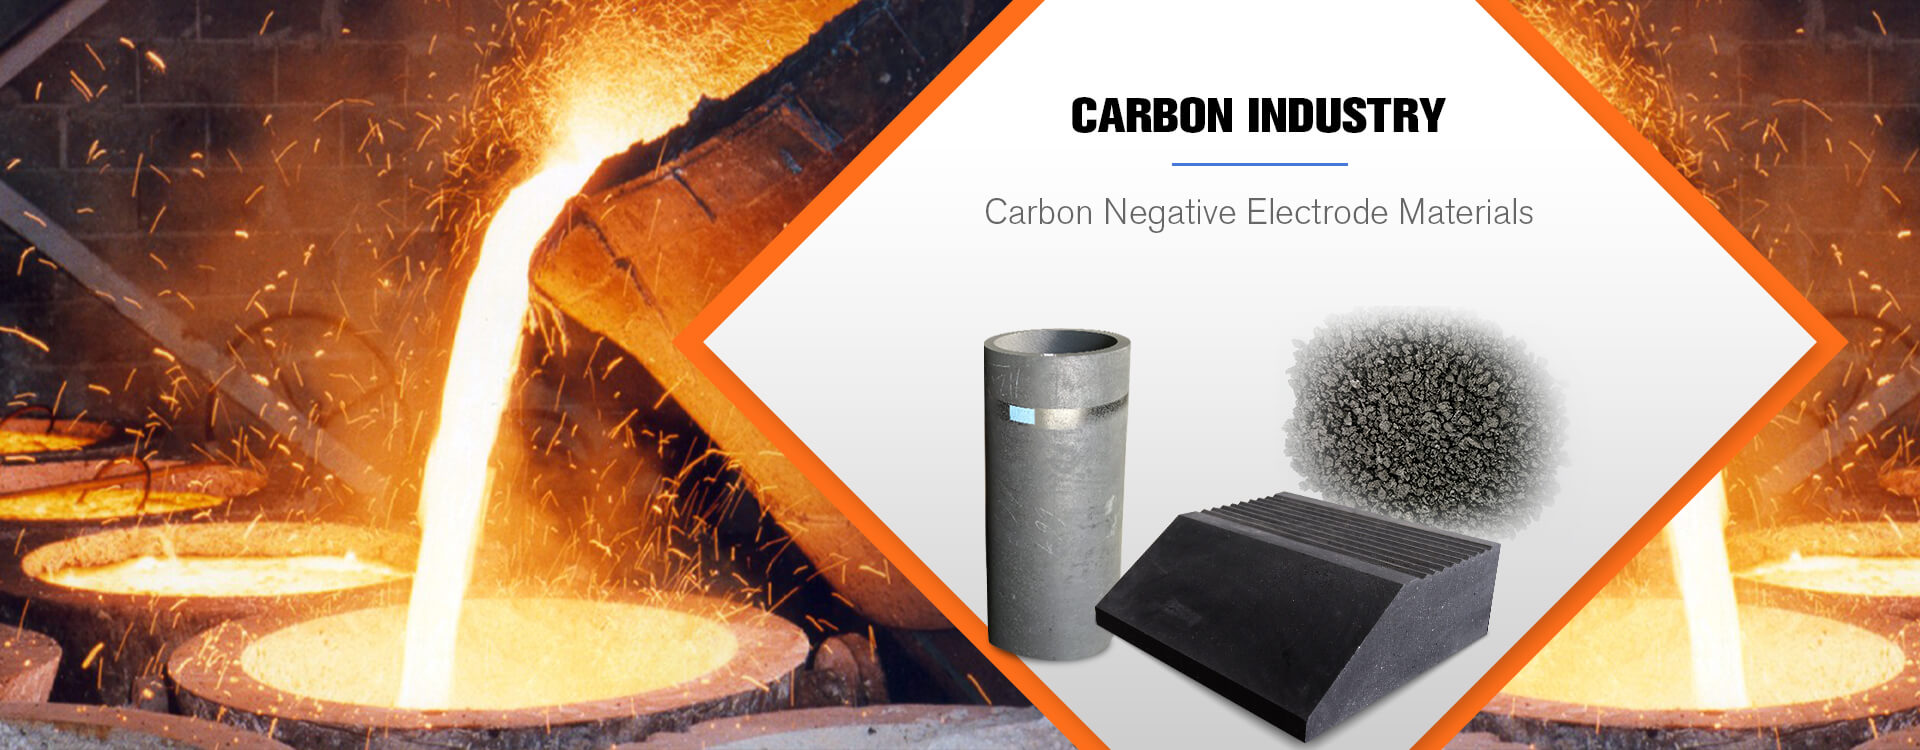 Hebei Lianjing Carbon New Material Tech Co., Ltd.